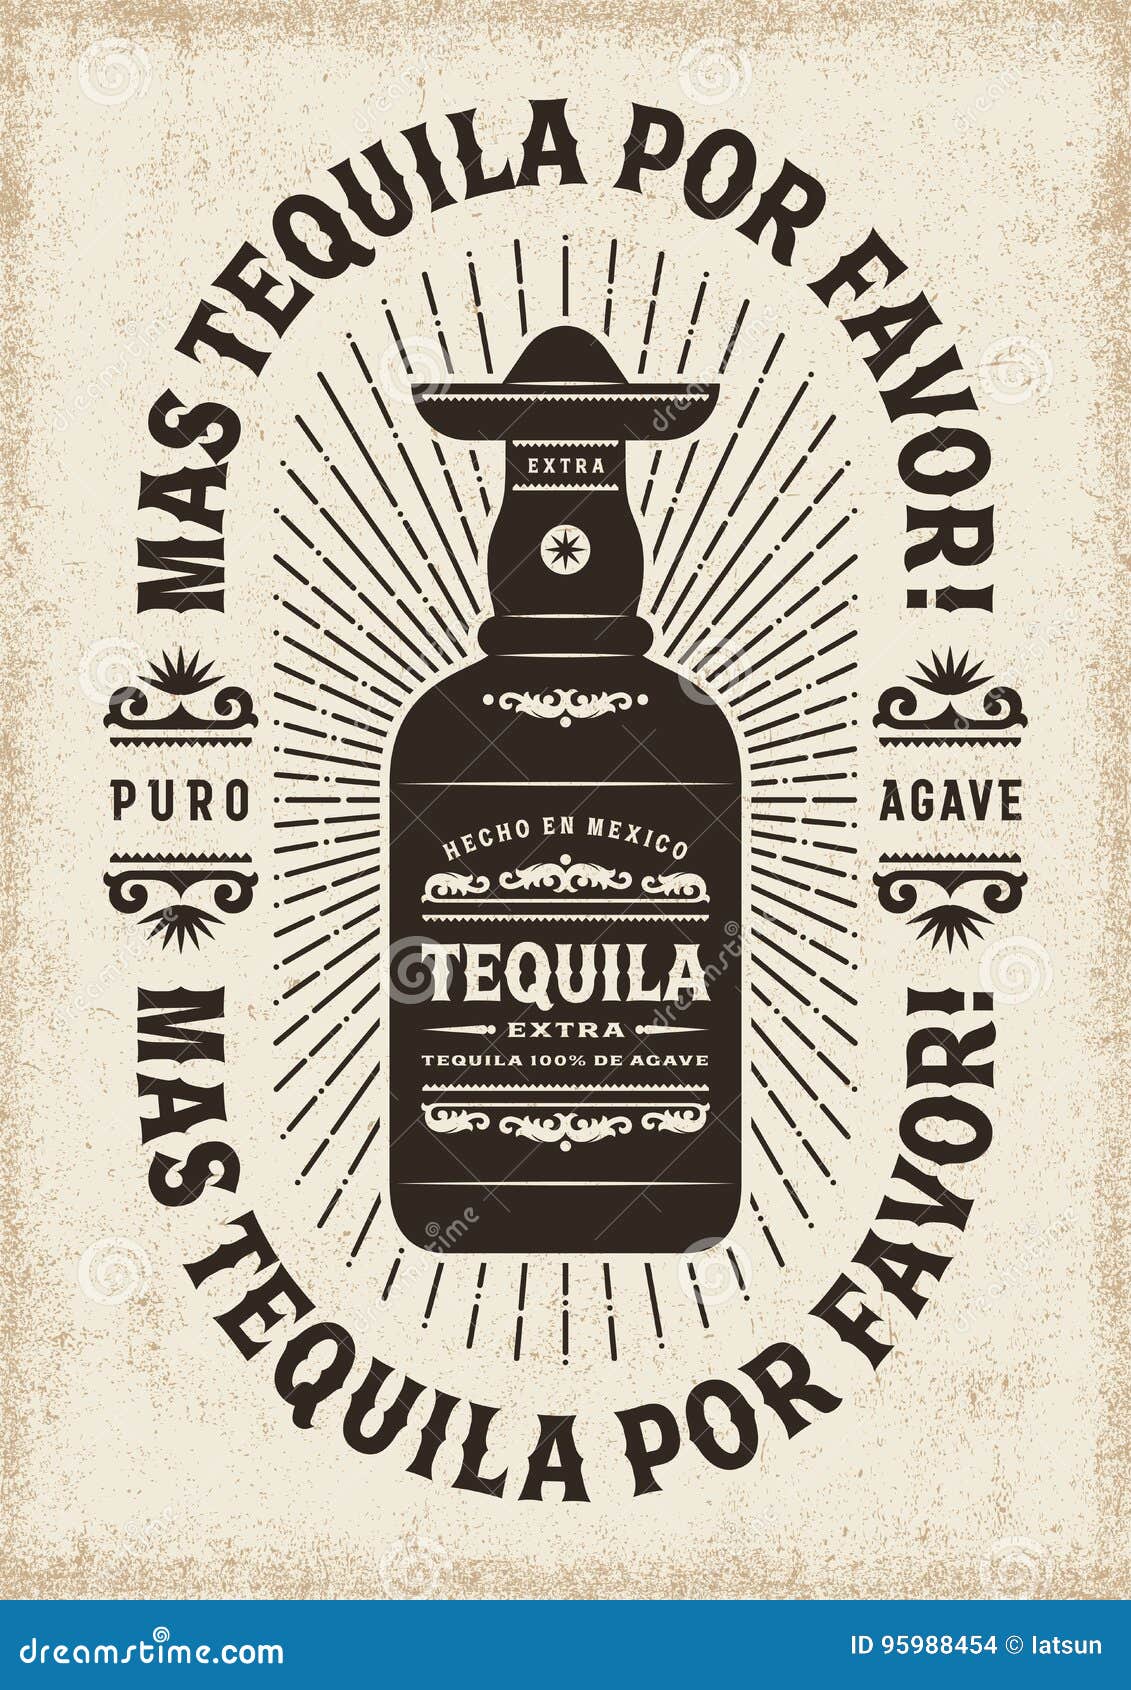 vintage mas tequila por favor more tequila please typography